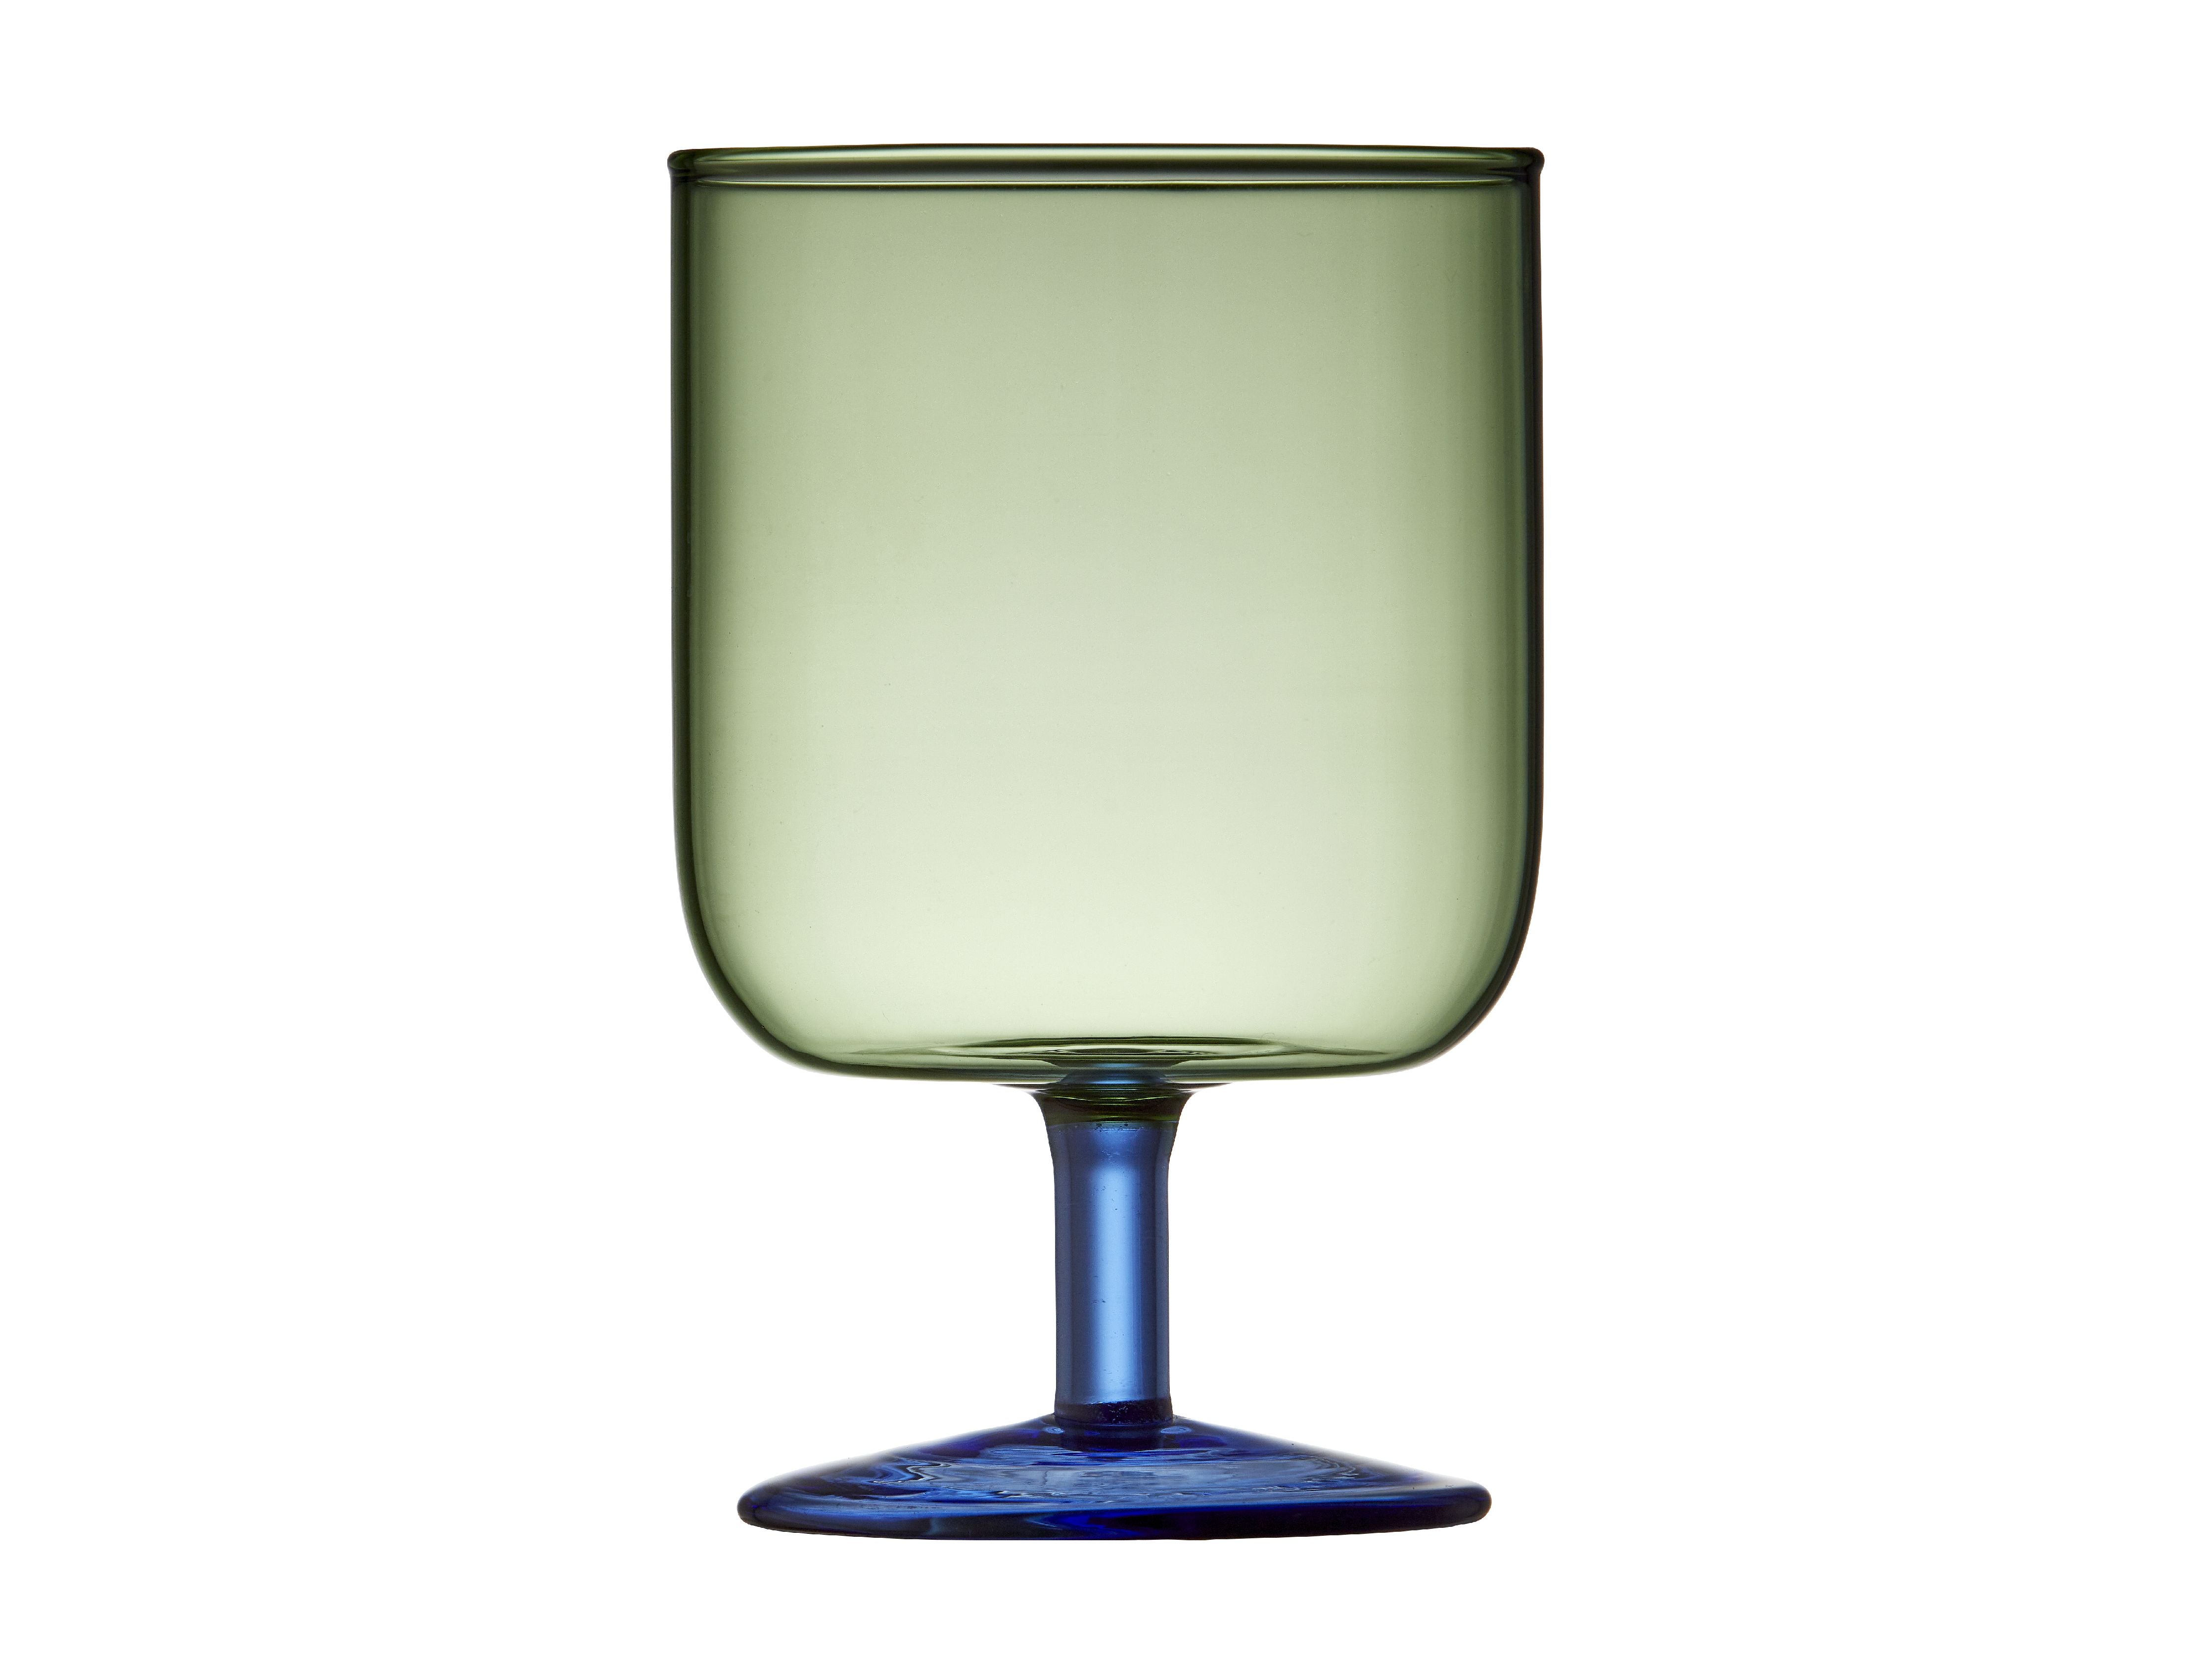 Lyngby Glas Torino Wine Glass 30 Cl 2 Pcs, Green/Blue